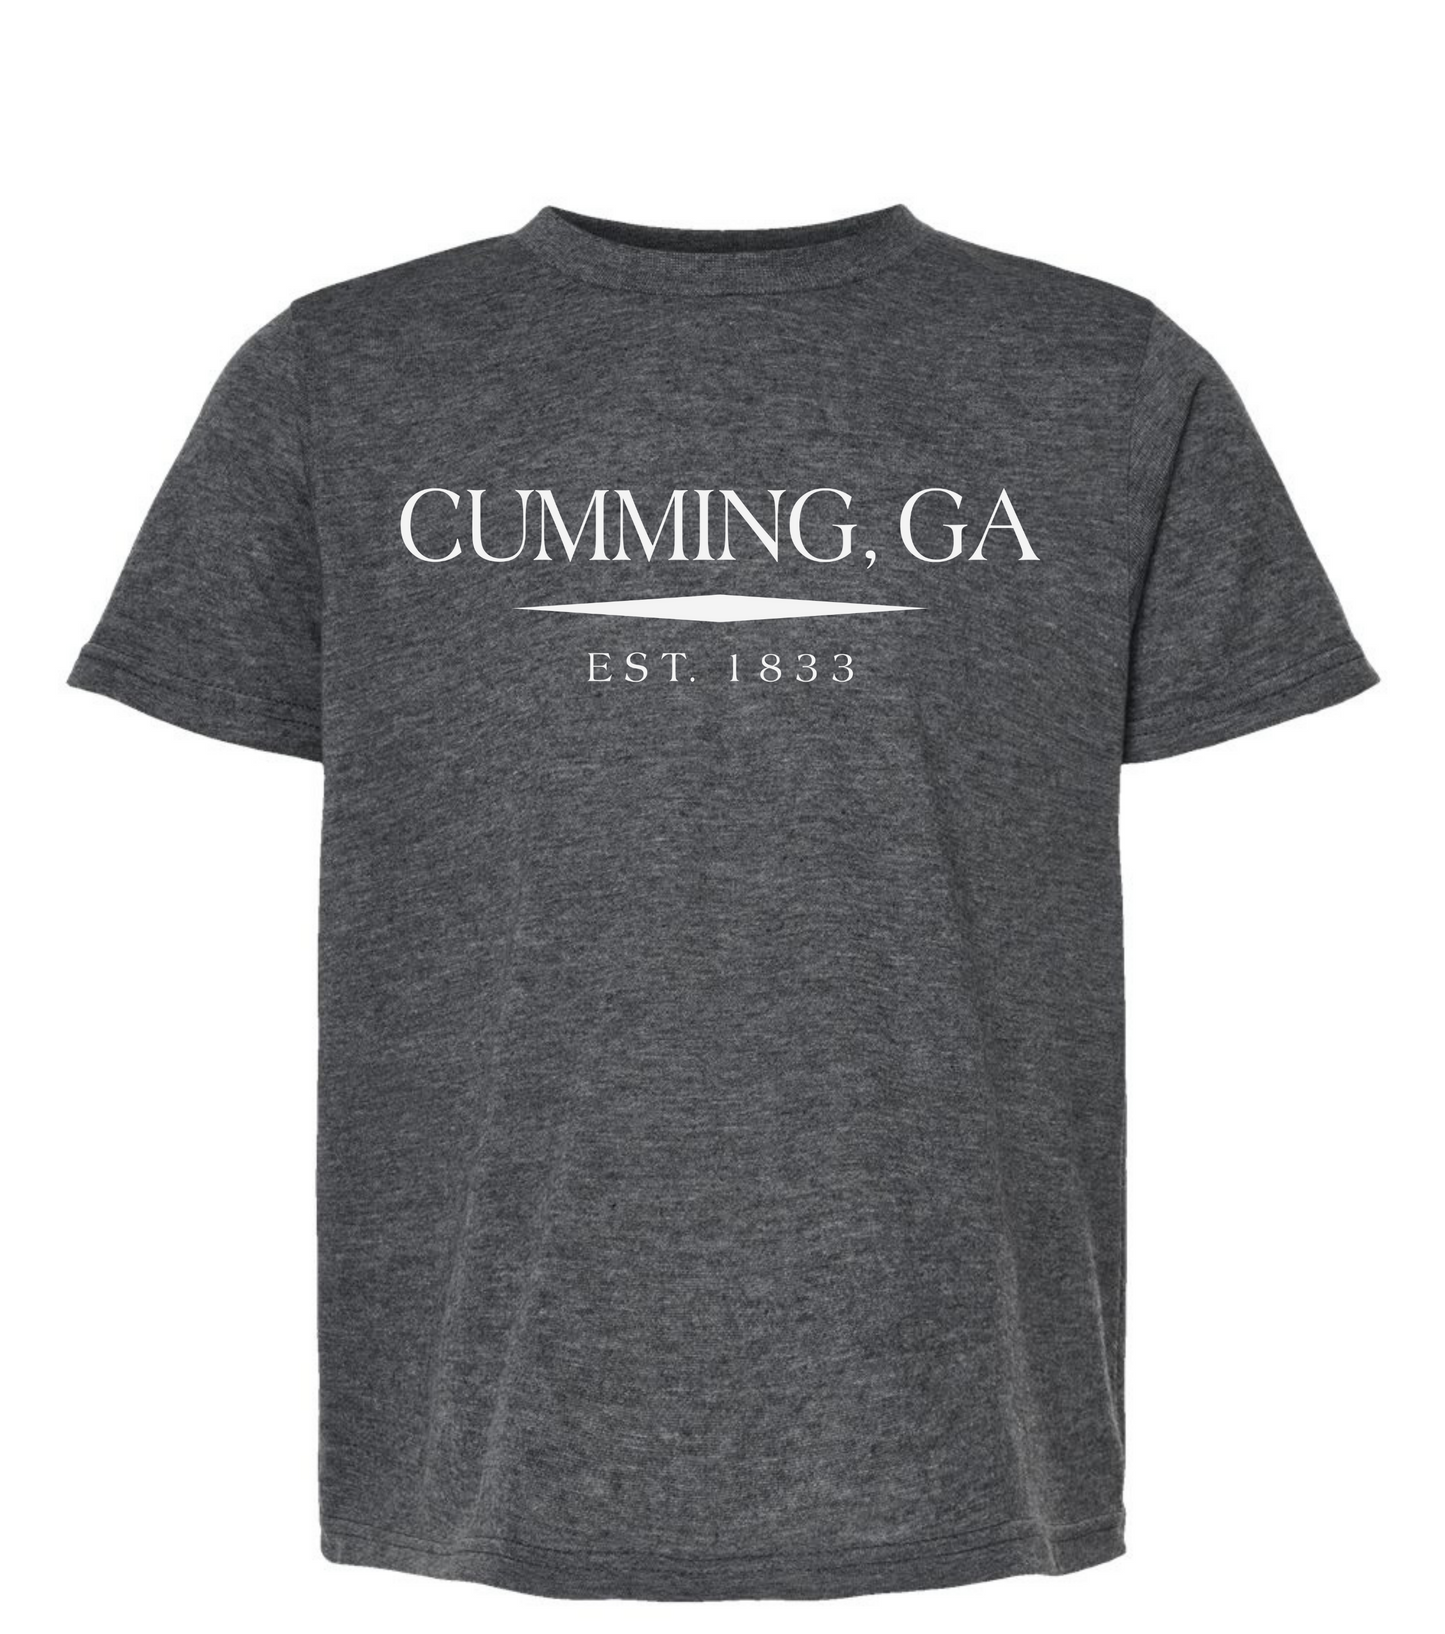 Cumming, GA T-Shirt